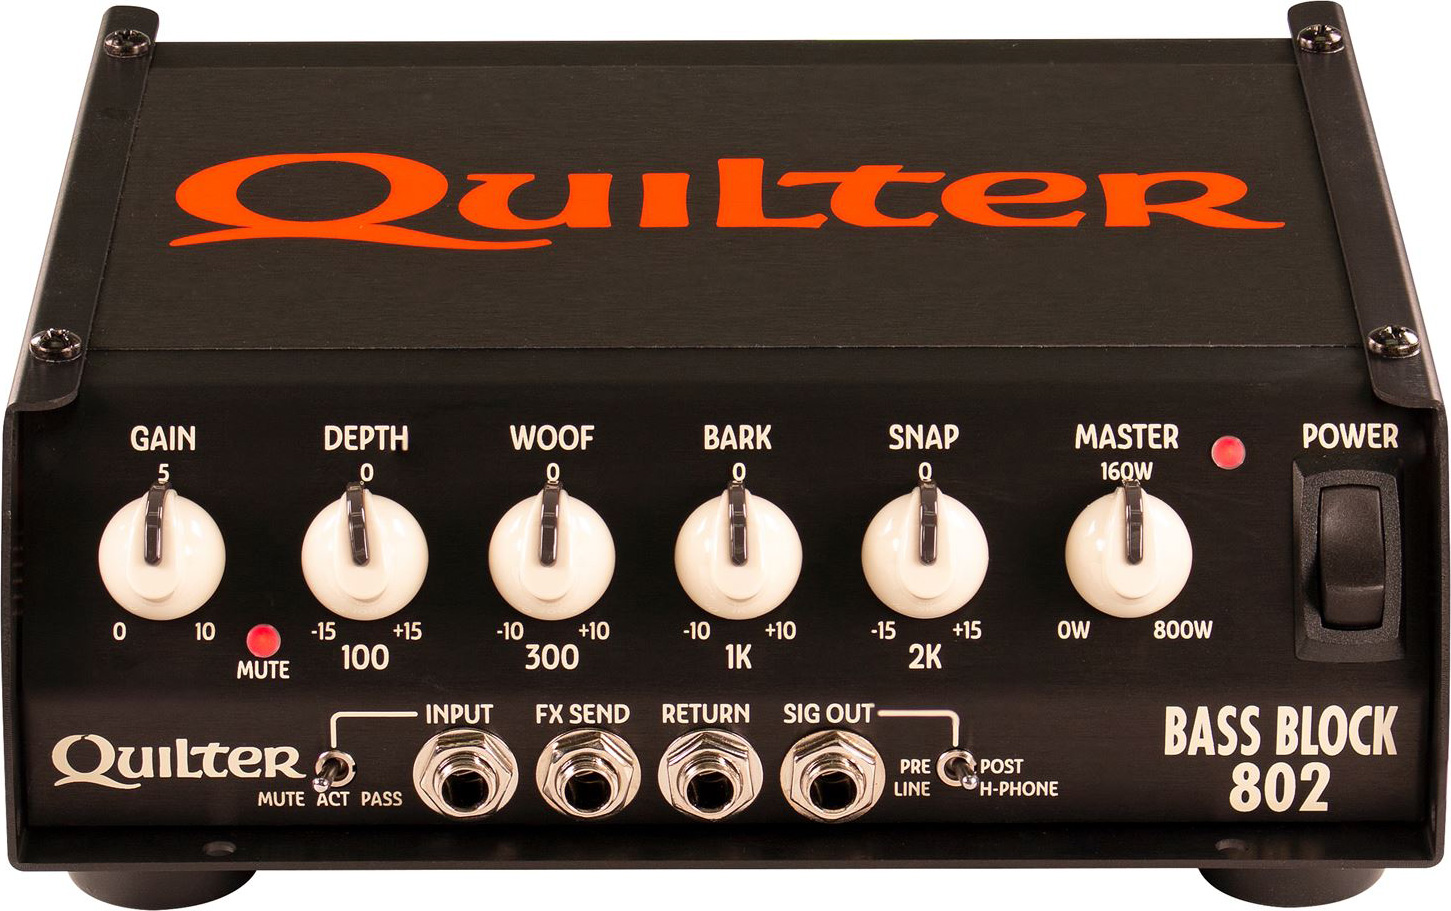 Quilter Bass Block 802 Amp